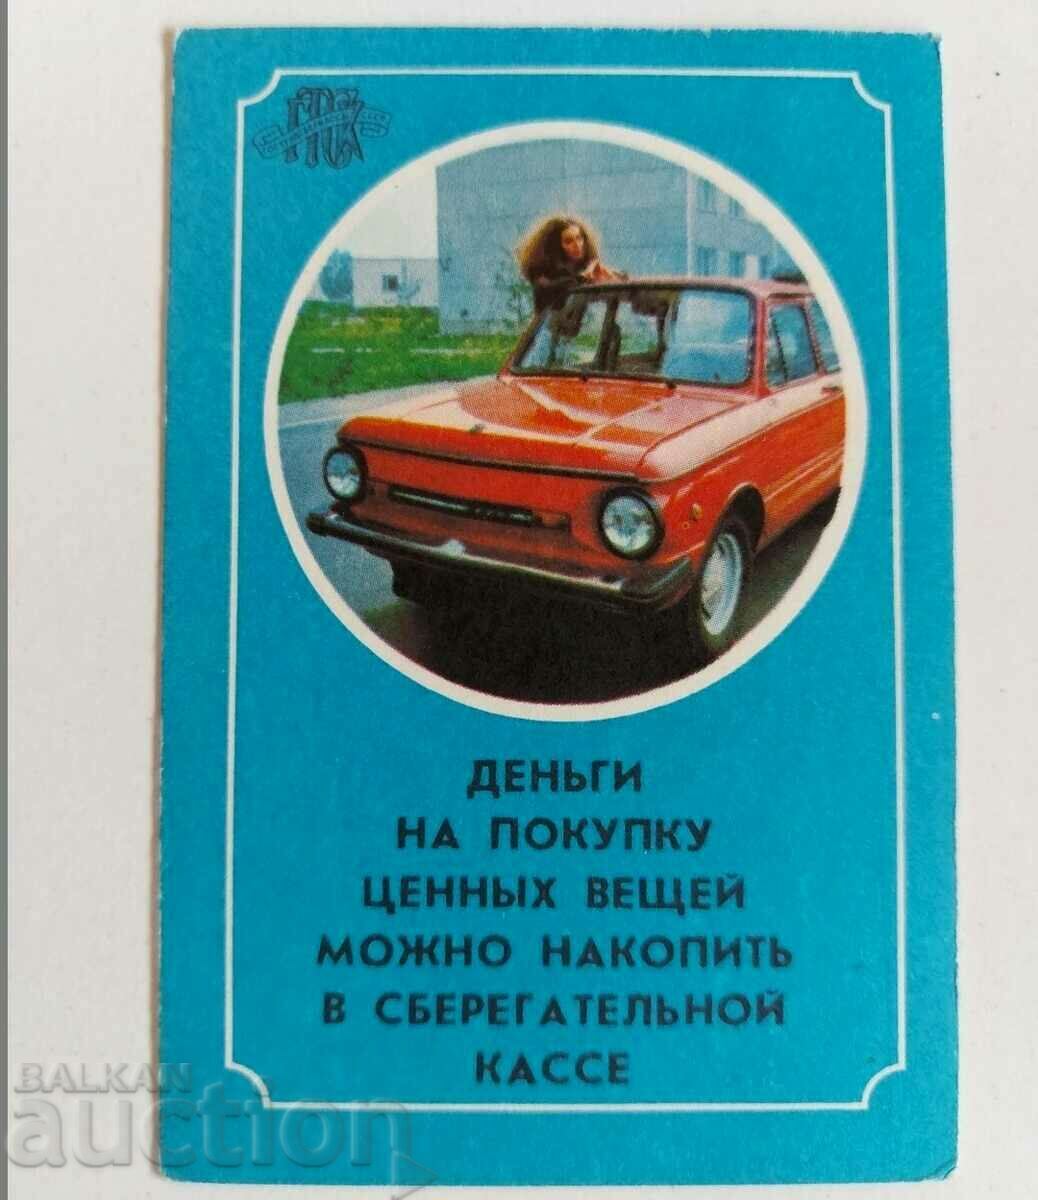 1982 CALENDAR SOCIAL CALENDAR AUTOMOBIL AUTOMOBIL URSS SOVIET